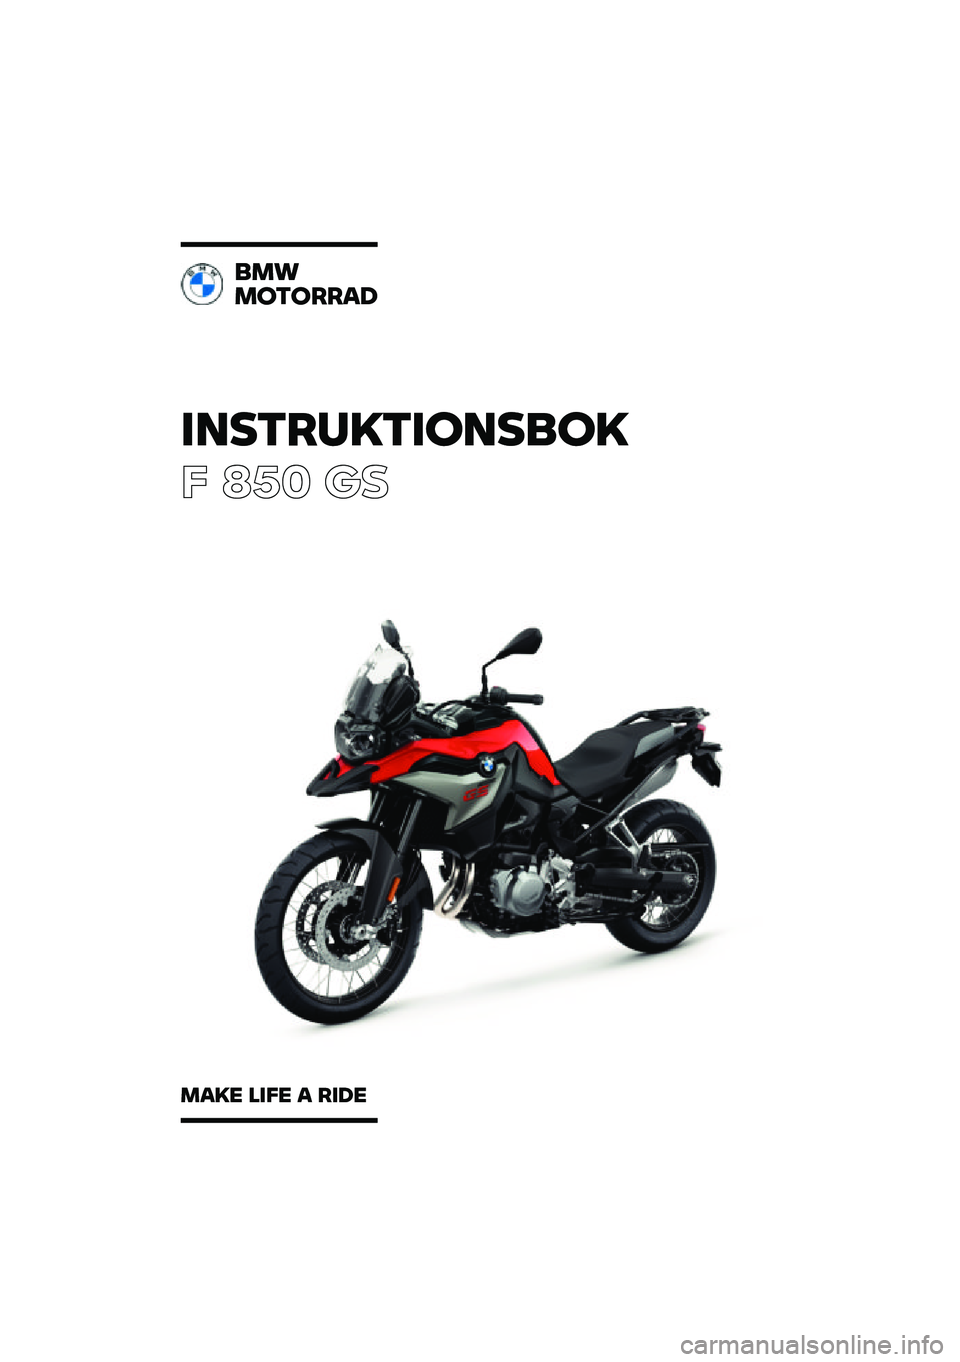 BMW MOTORRAD F 850 GS 2021  Instruktionsbok (in Swedish) �������\b���	���
�	�\b
� ��� �	�

�
��\f
��	��	���
�
��
�\b� ���� �
 ���� 